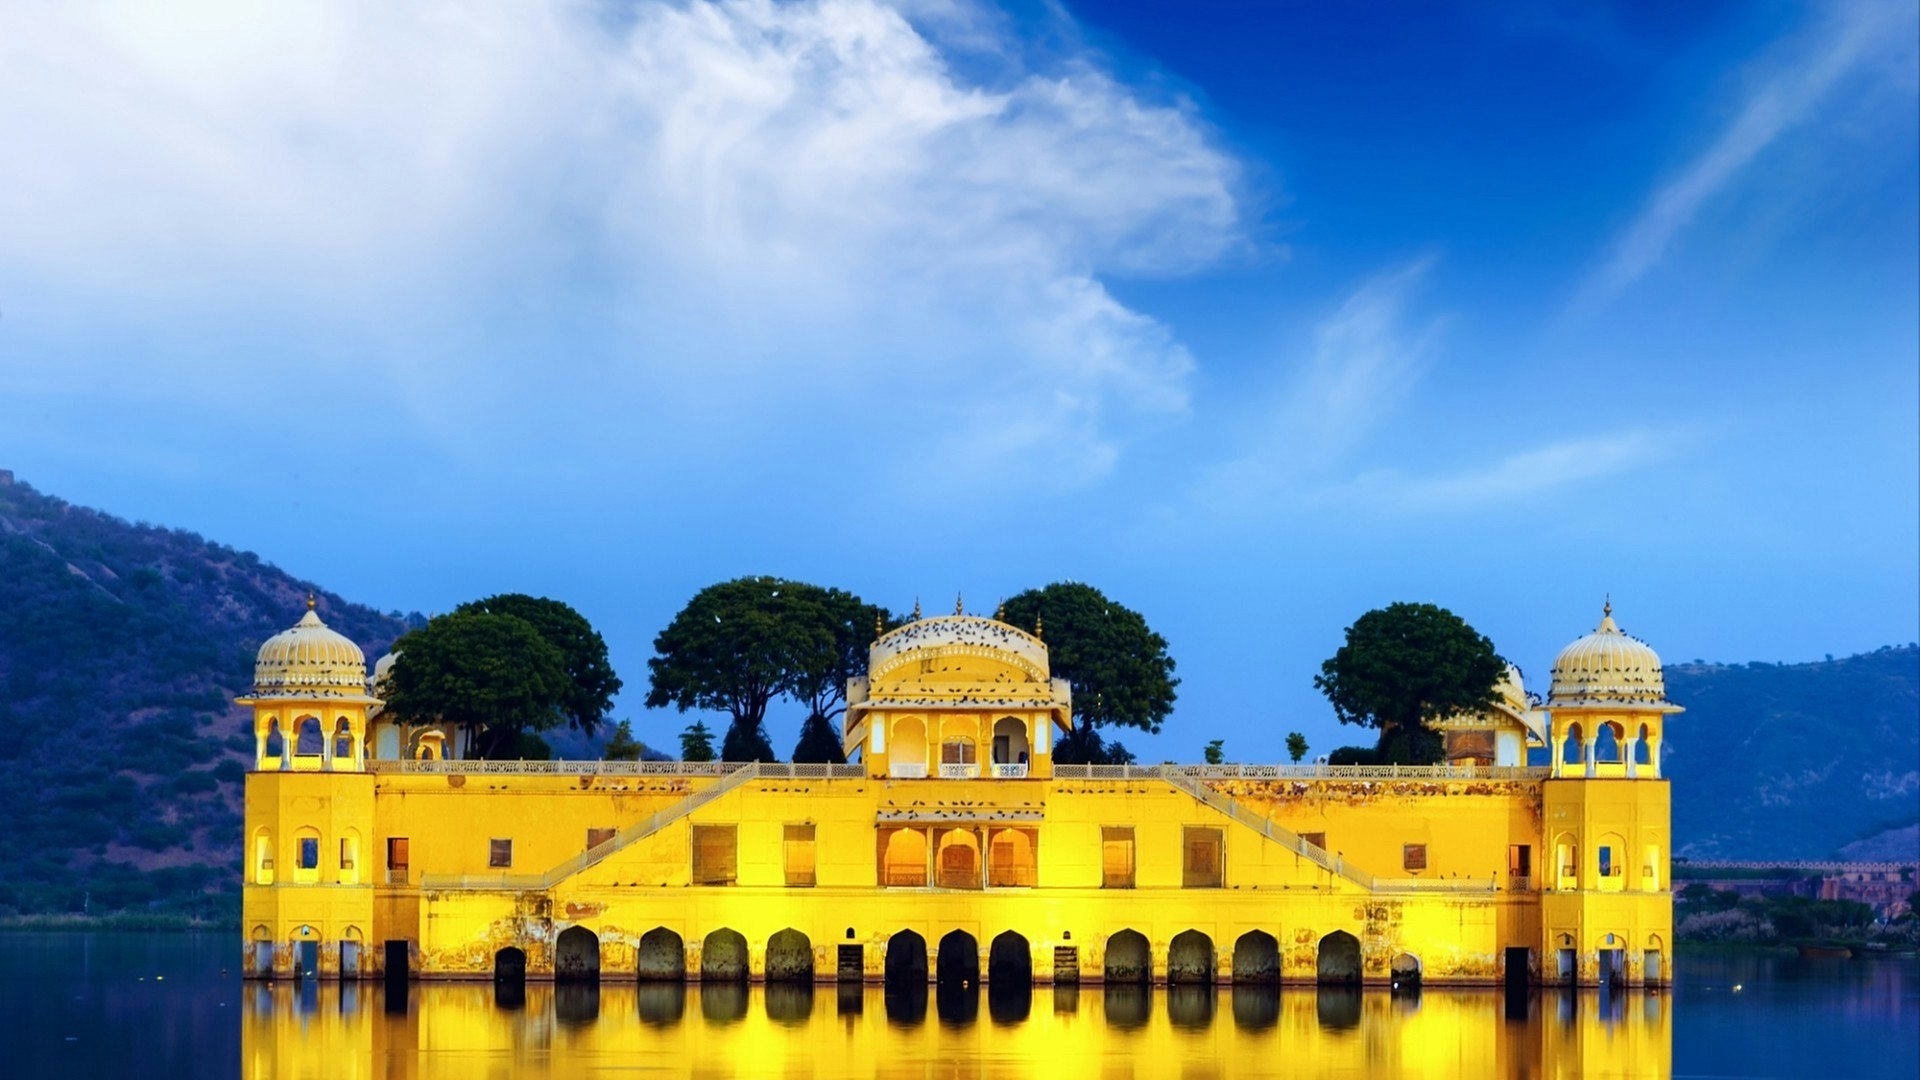 Indian water palace on Jal Mahal lake at night time in Jaipur, India